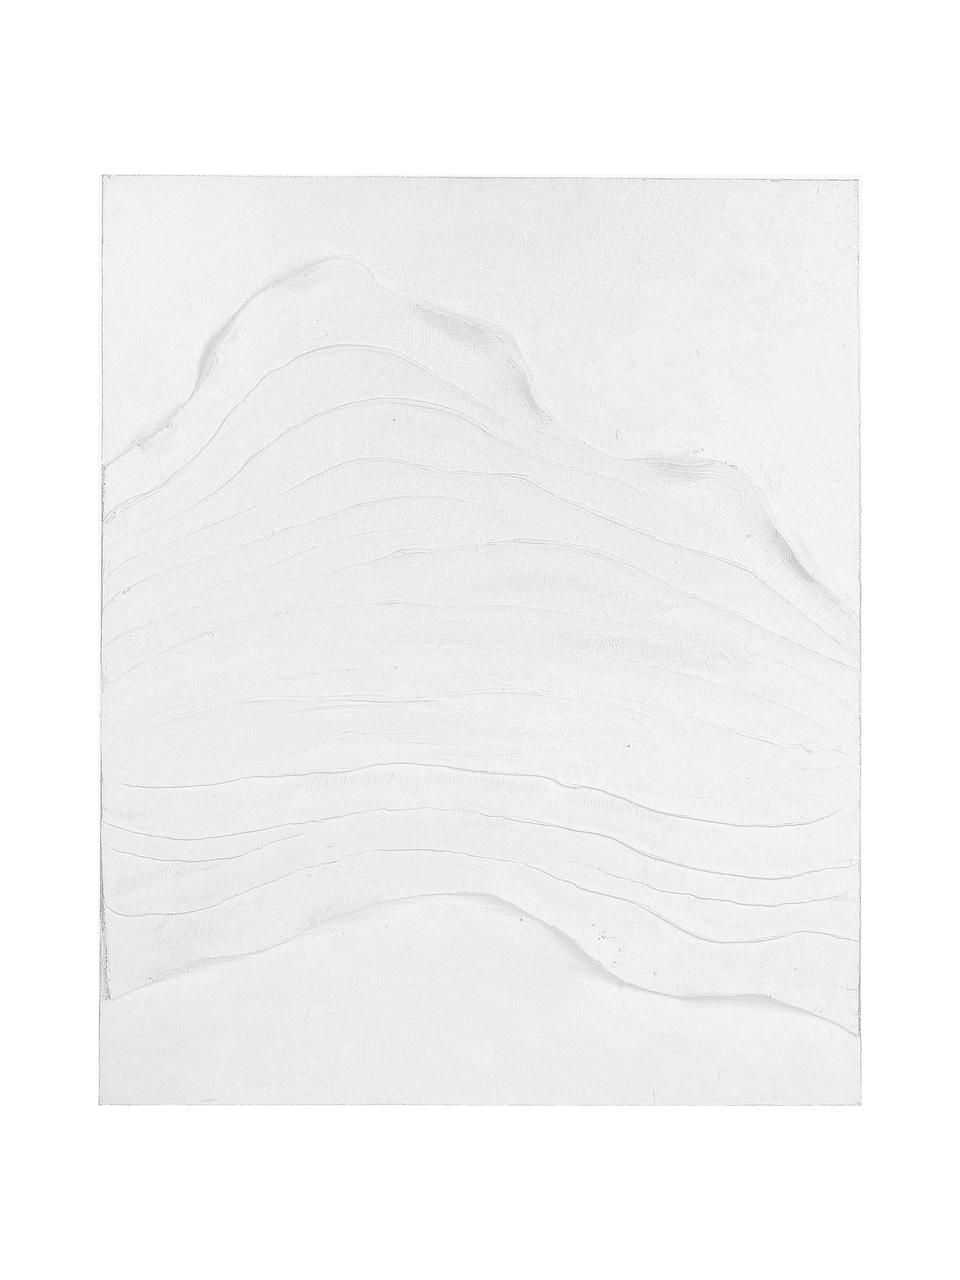 Leinwandbild Texture, Bild: Flachsfasern, Weiß, B 80 x H 100 cm